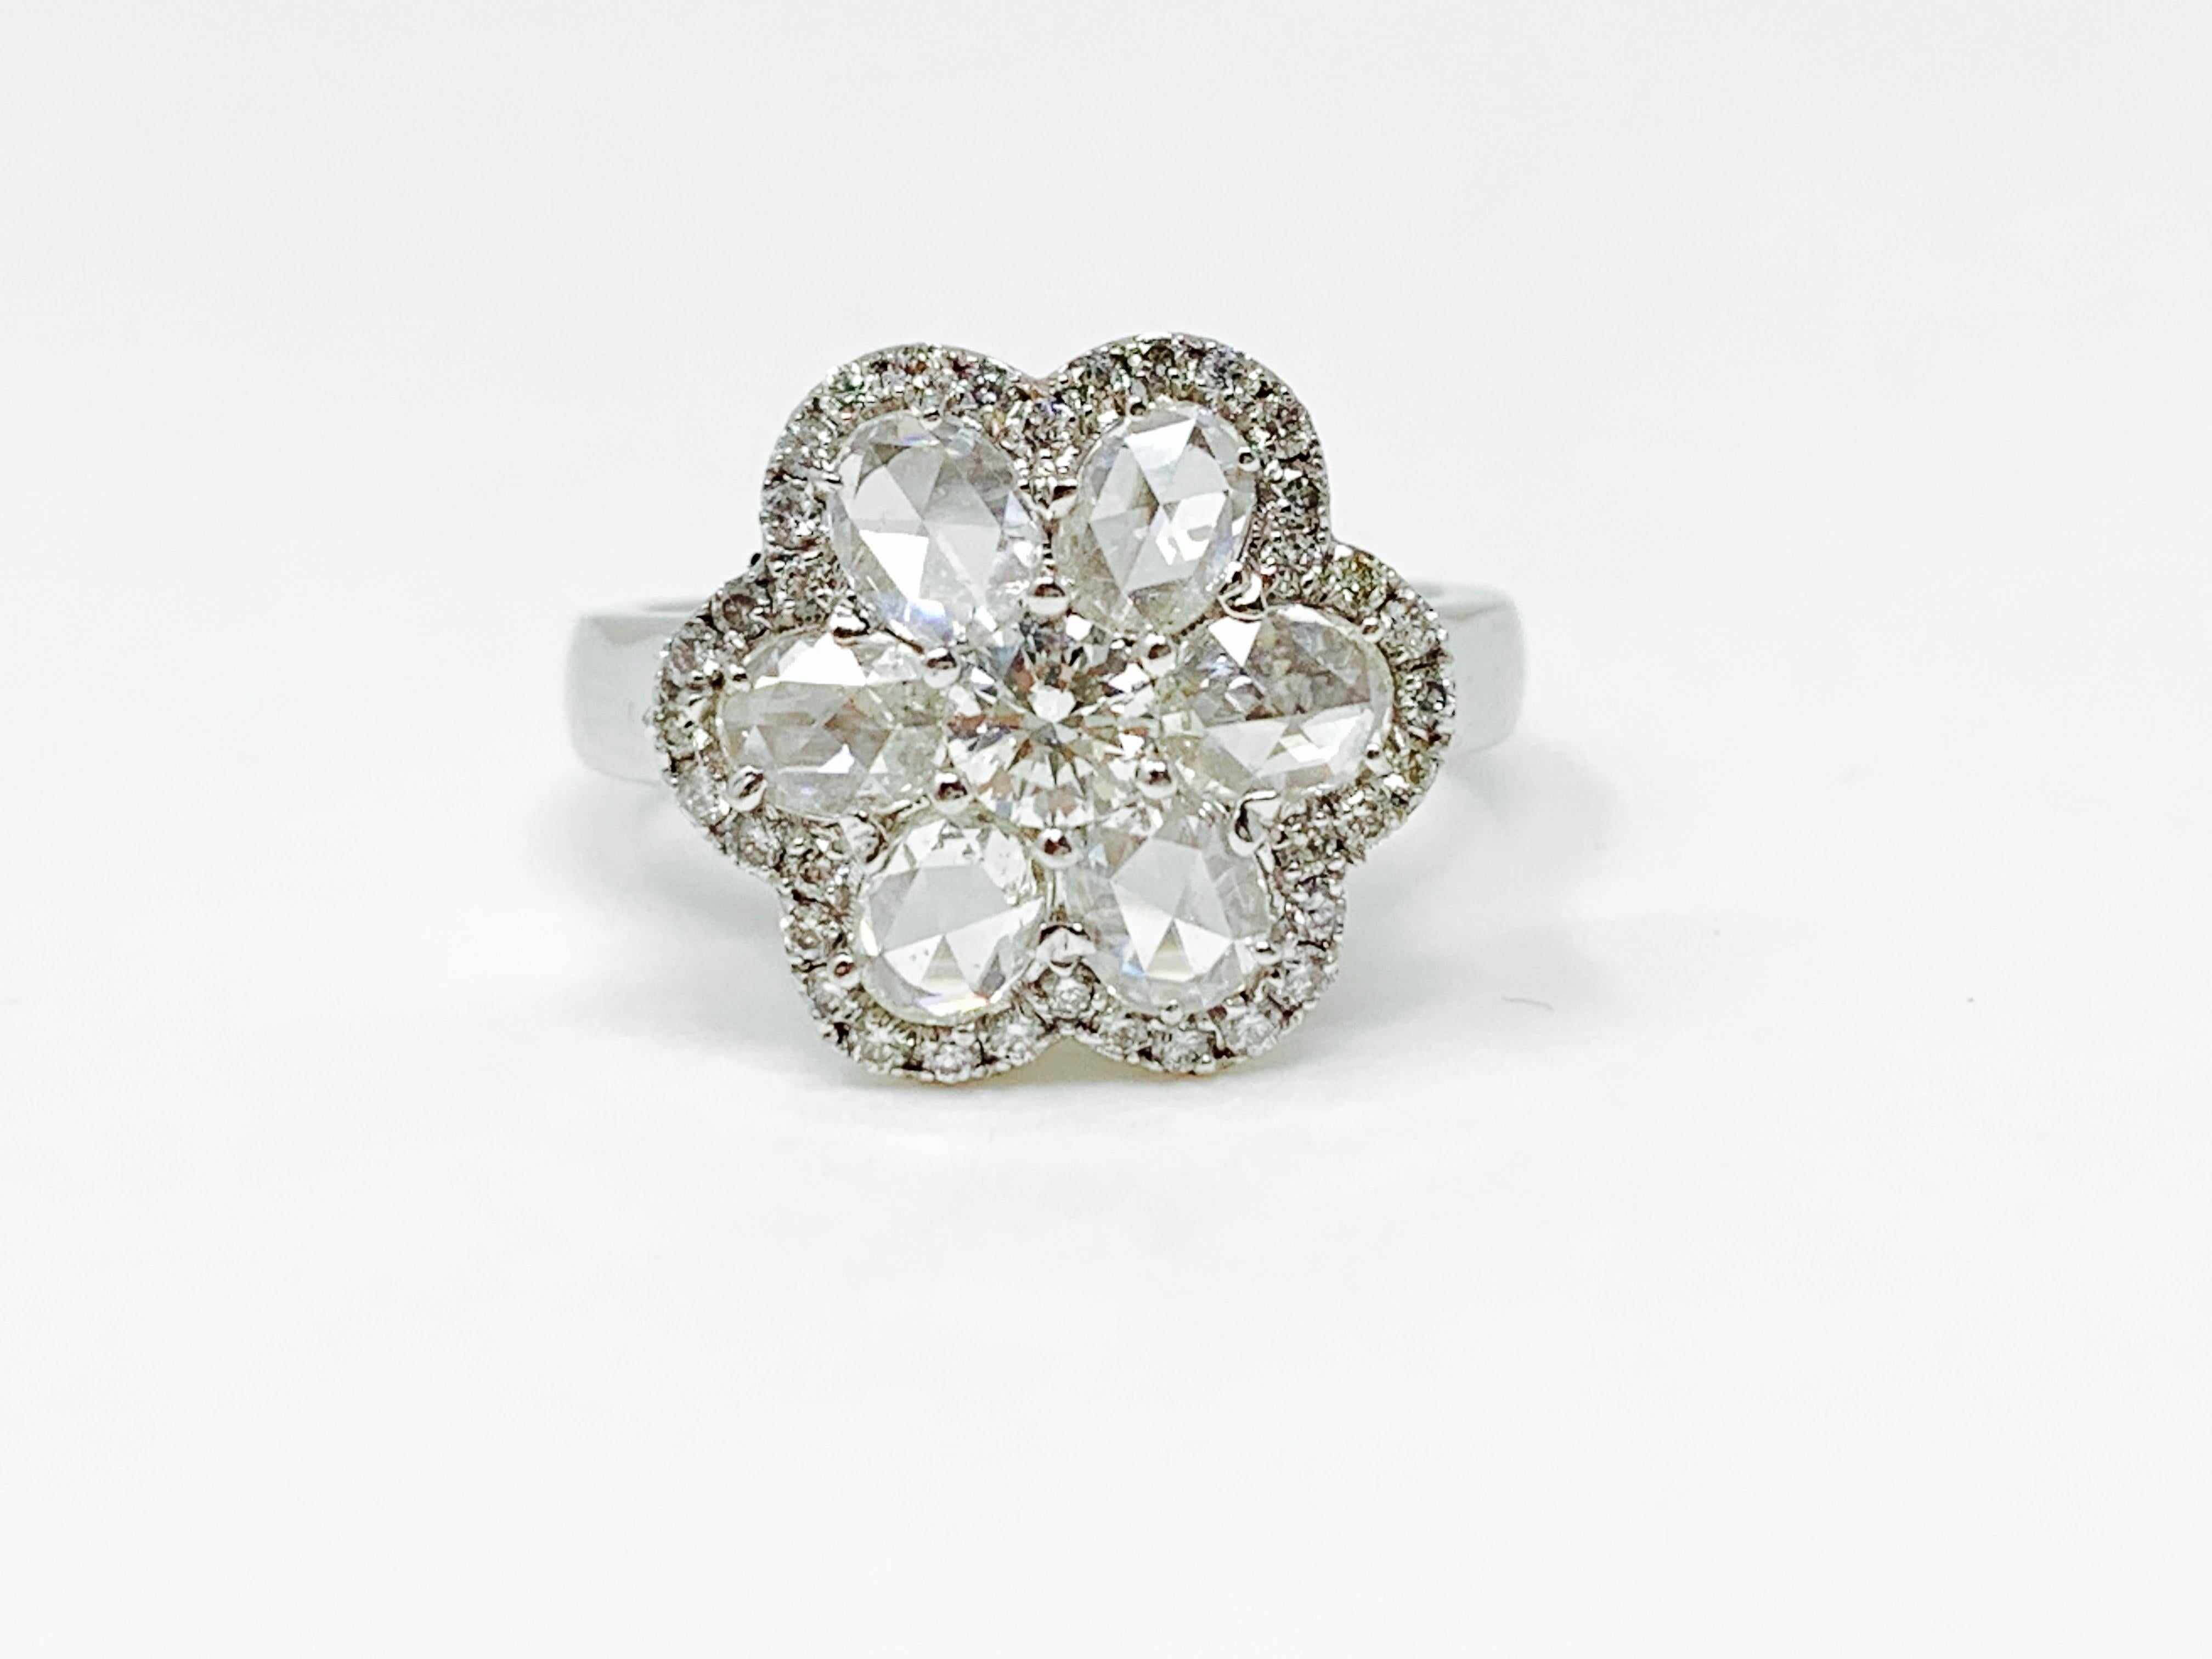 Moguldiam Inc White rose cut diamond engagement ring handmade in 18 k white gold .
The details are as follows : 
Diamond weight : 2.70 carat 
Metal : 18 k white gold 
Ring size : 6 1/2 